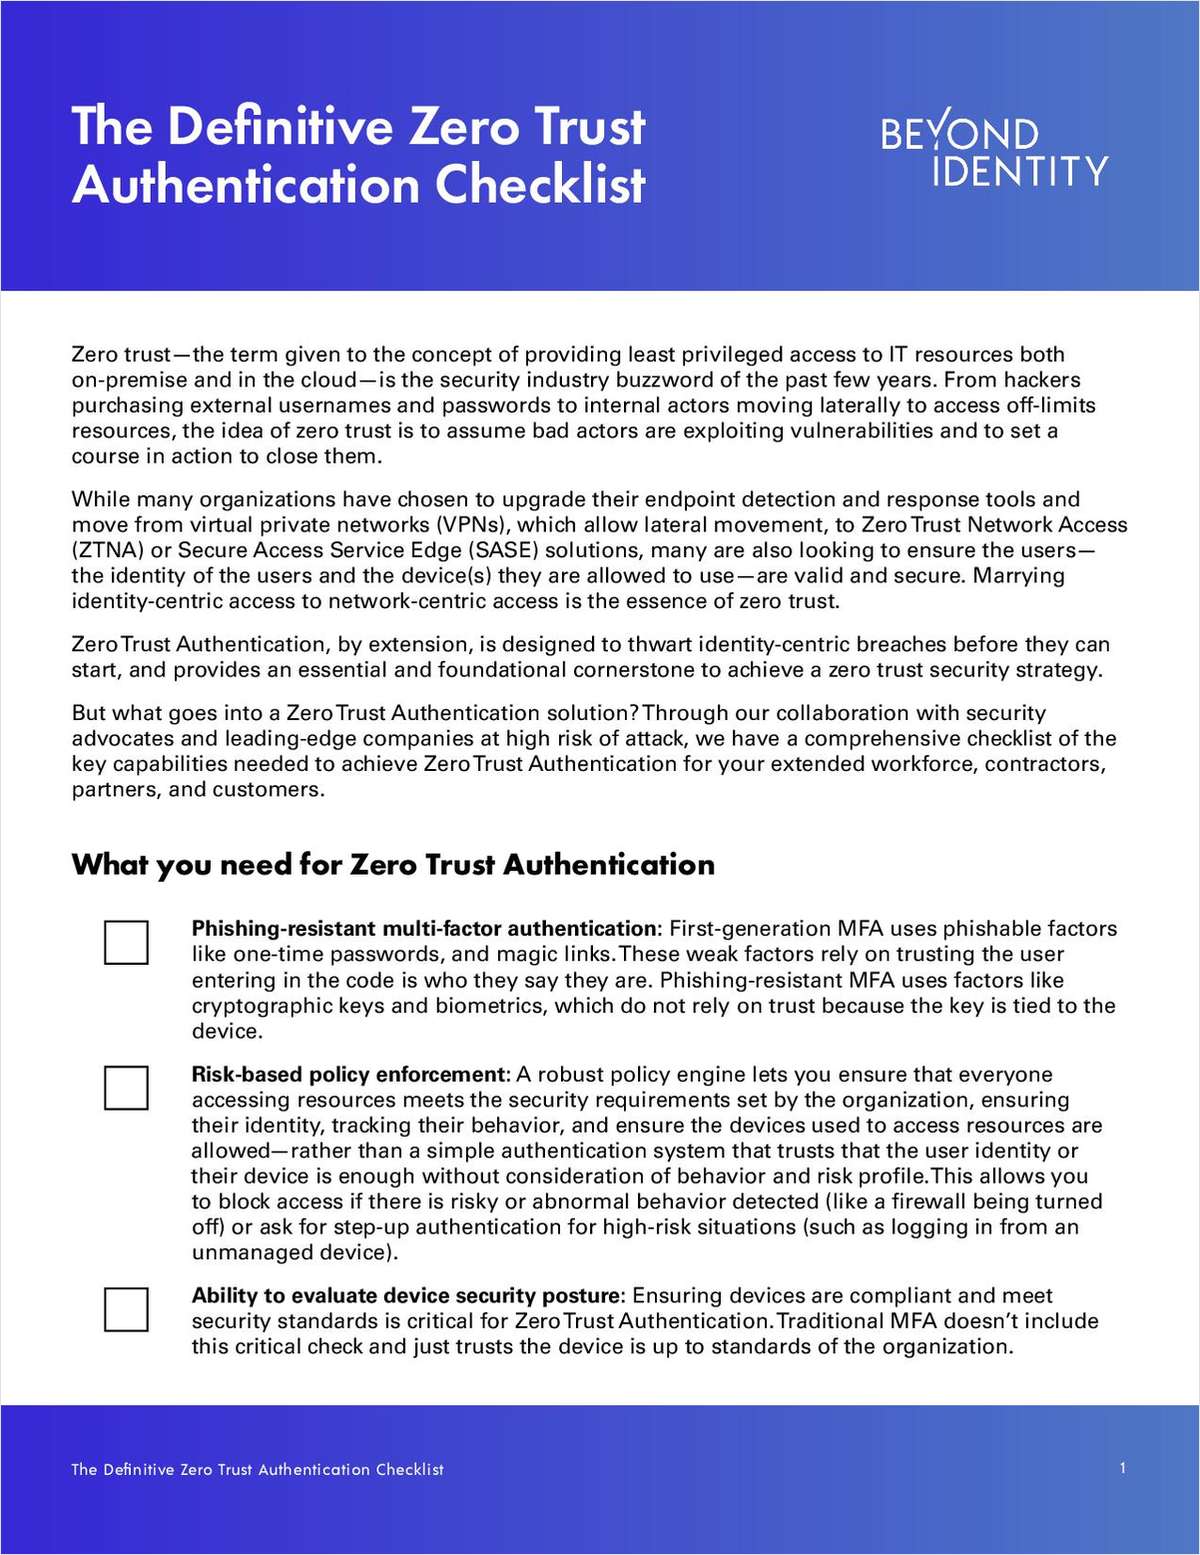 The Definitive Zero Trust Authentication Checklist